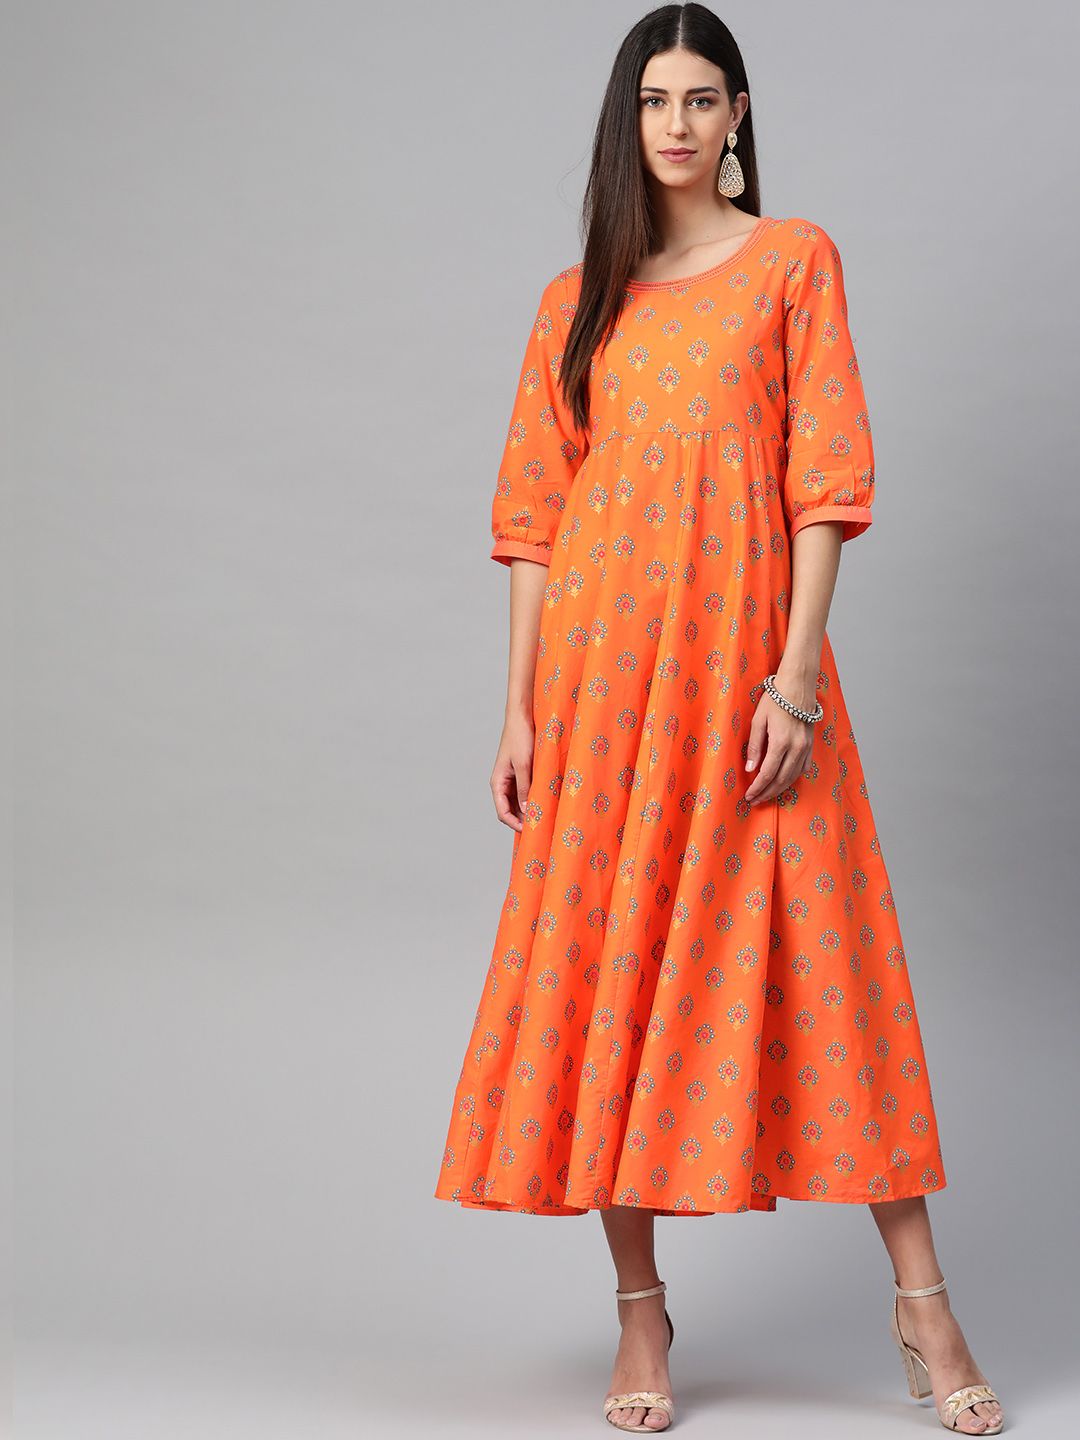 AURELIA Orange & Blue Floral Pure Cotton Ethnic A-Line Midi Dress Price in India